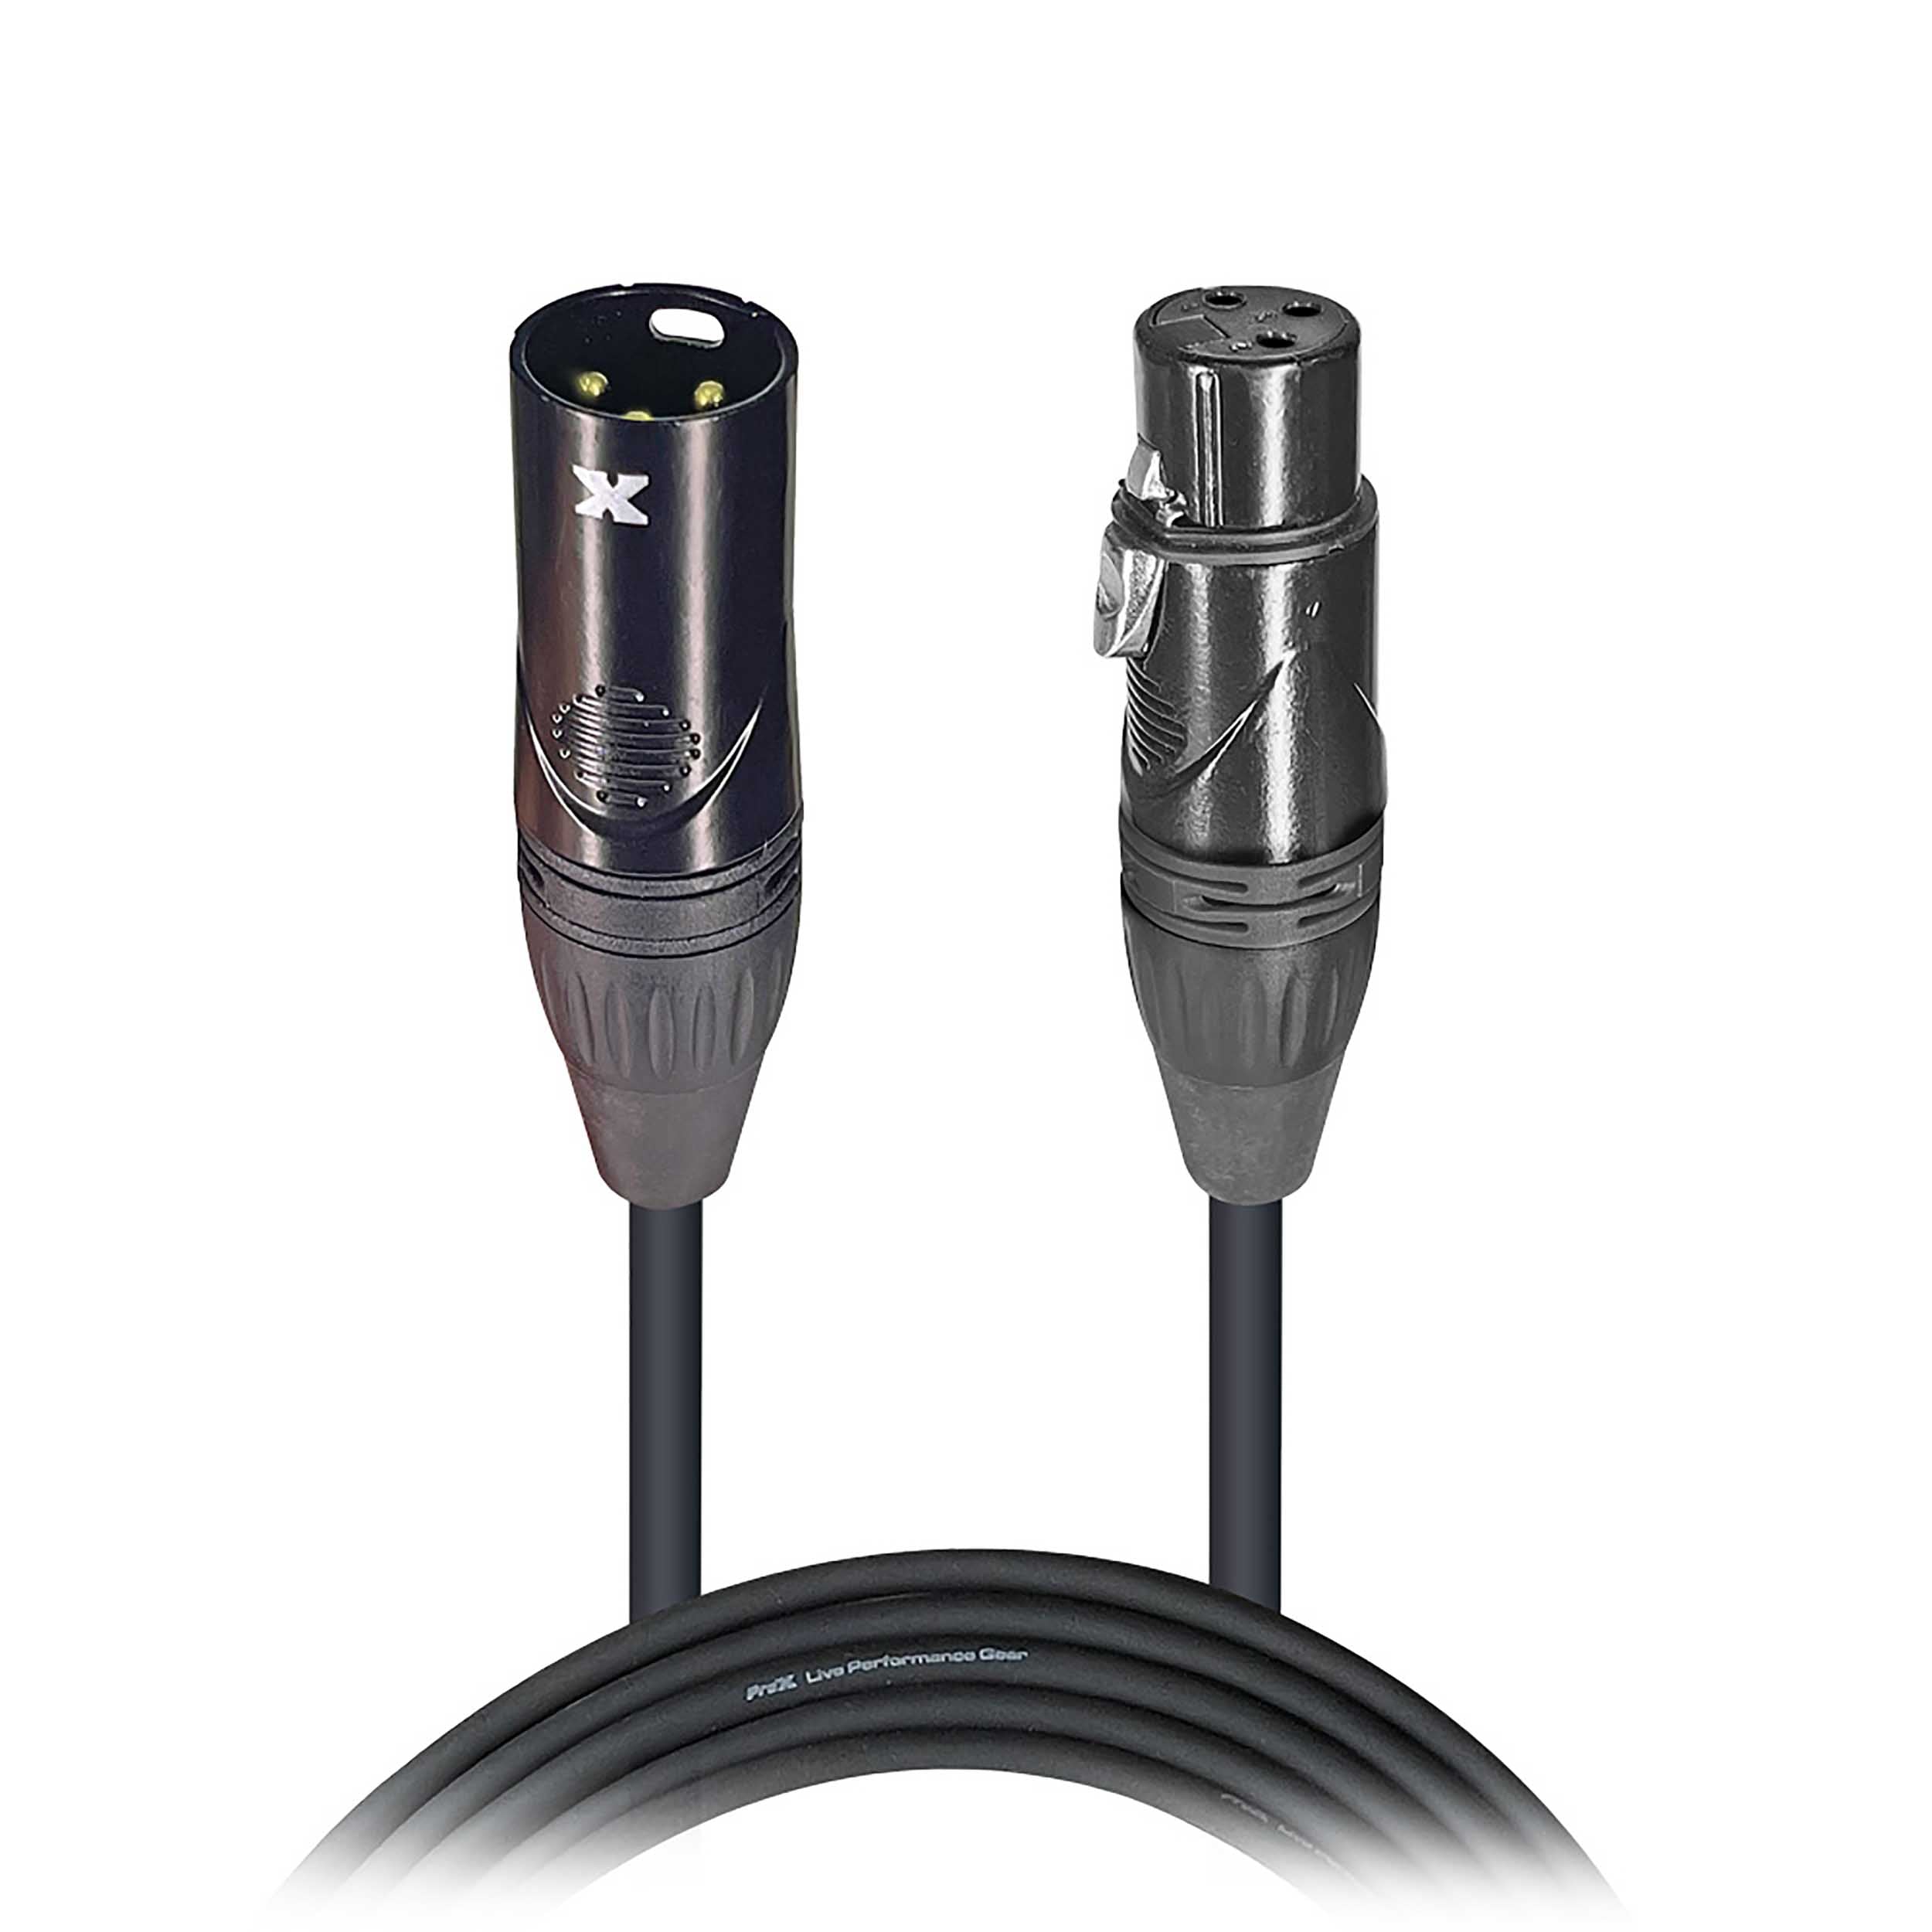 ProX XC-DMX15, DMX XLR3-M to XLR3-F High Performance Cable - 15 Feet by ProX Cases